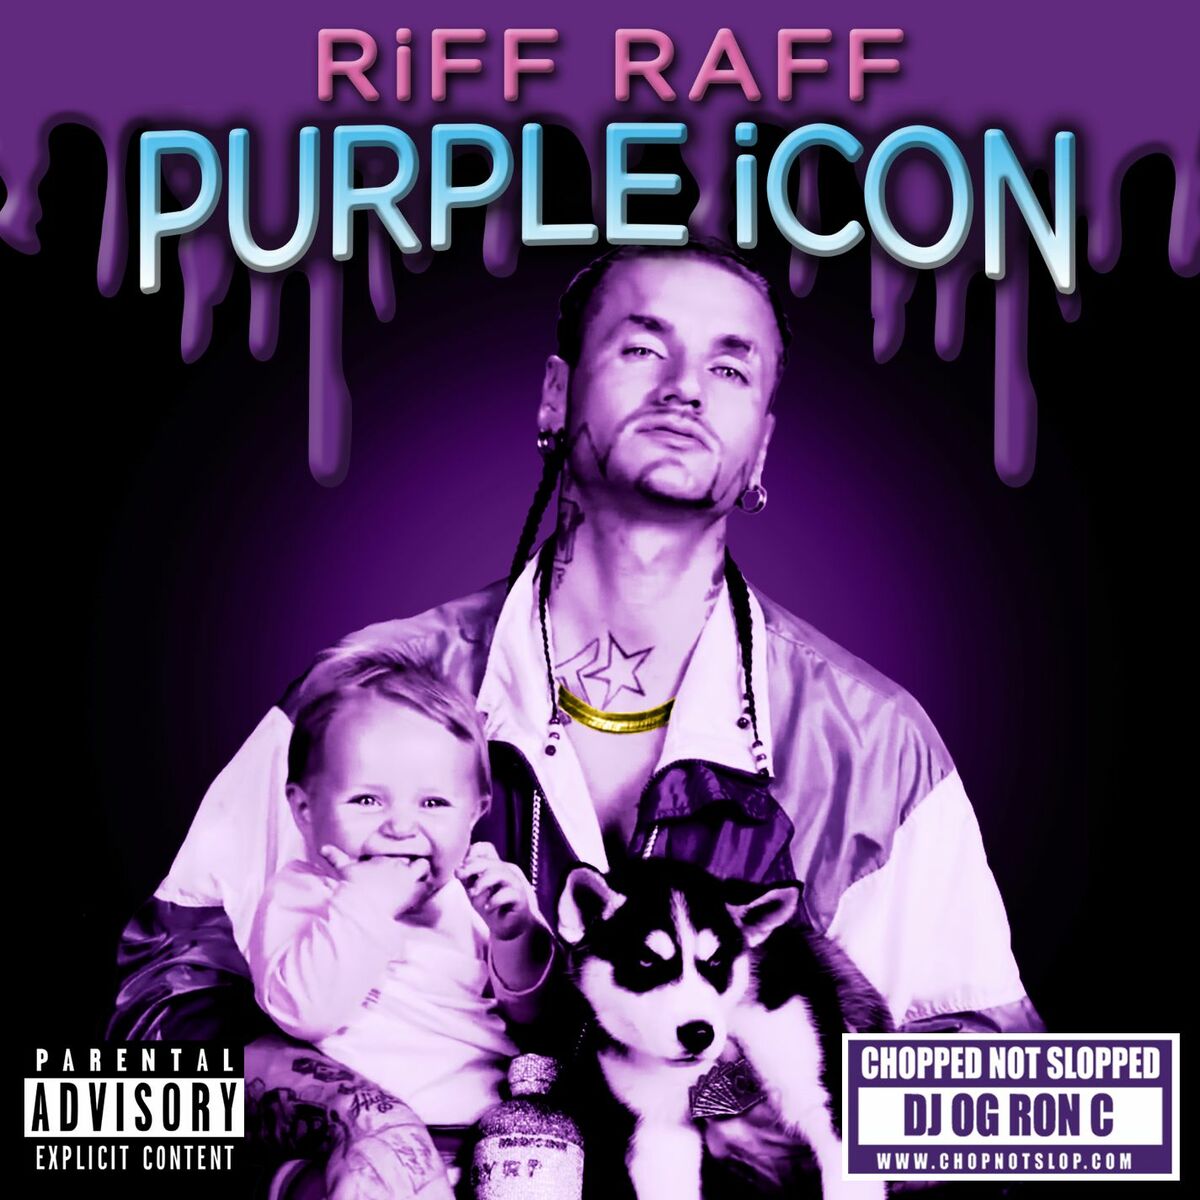 Riff Raff: albums, songs, playlists | Listen on Deezer